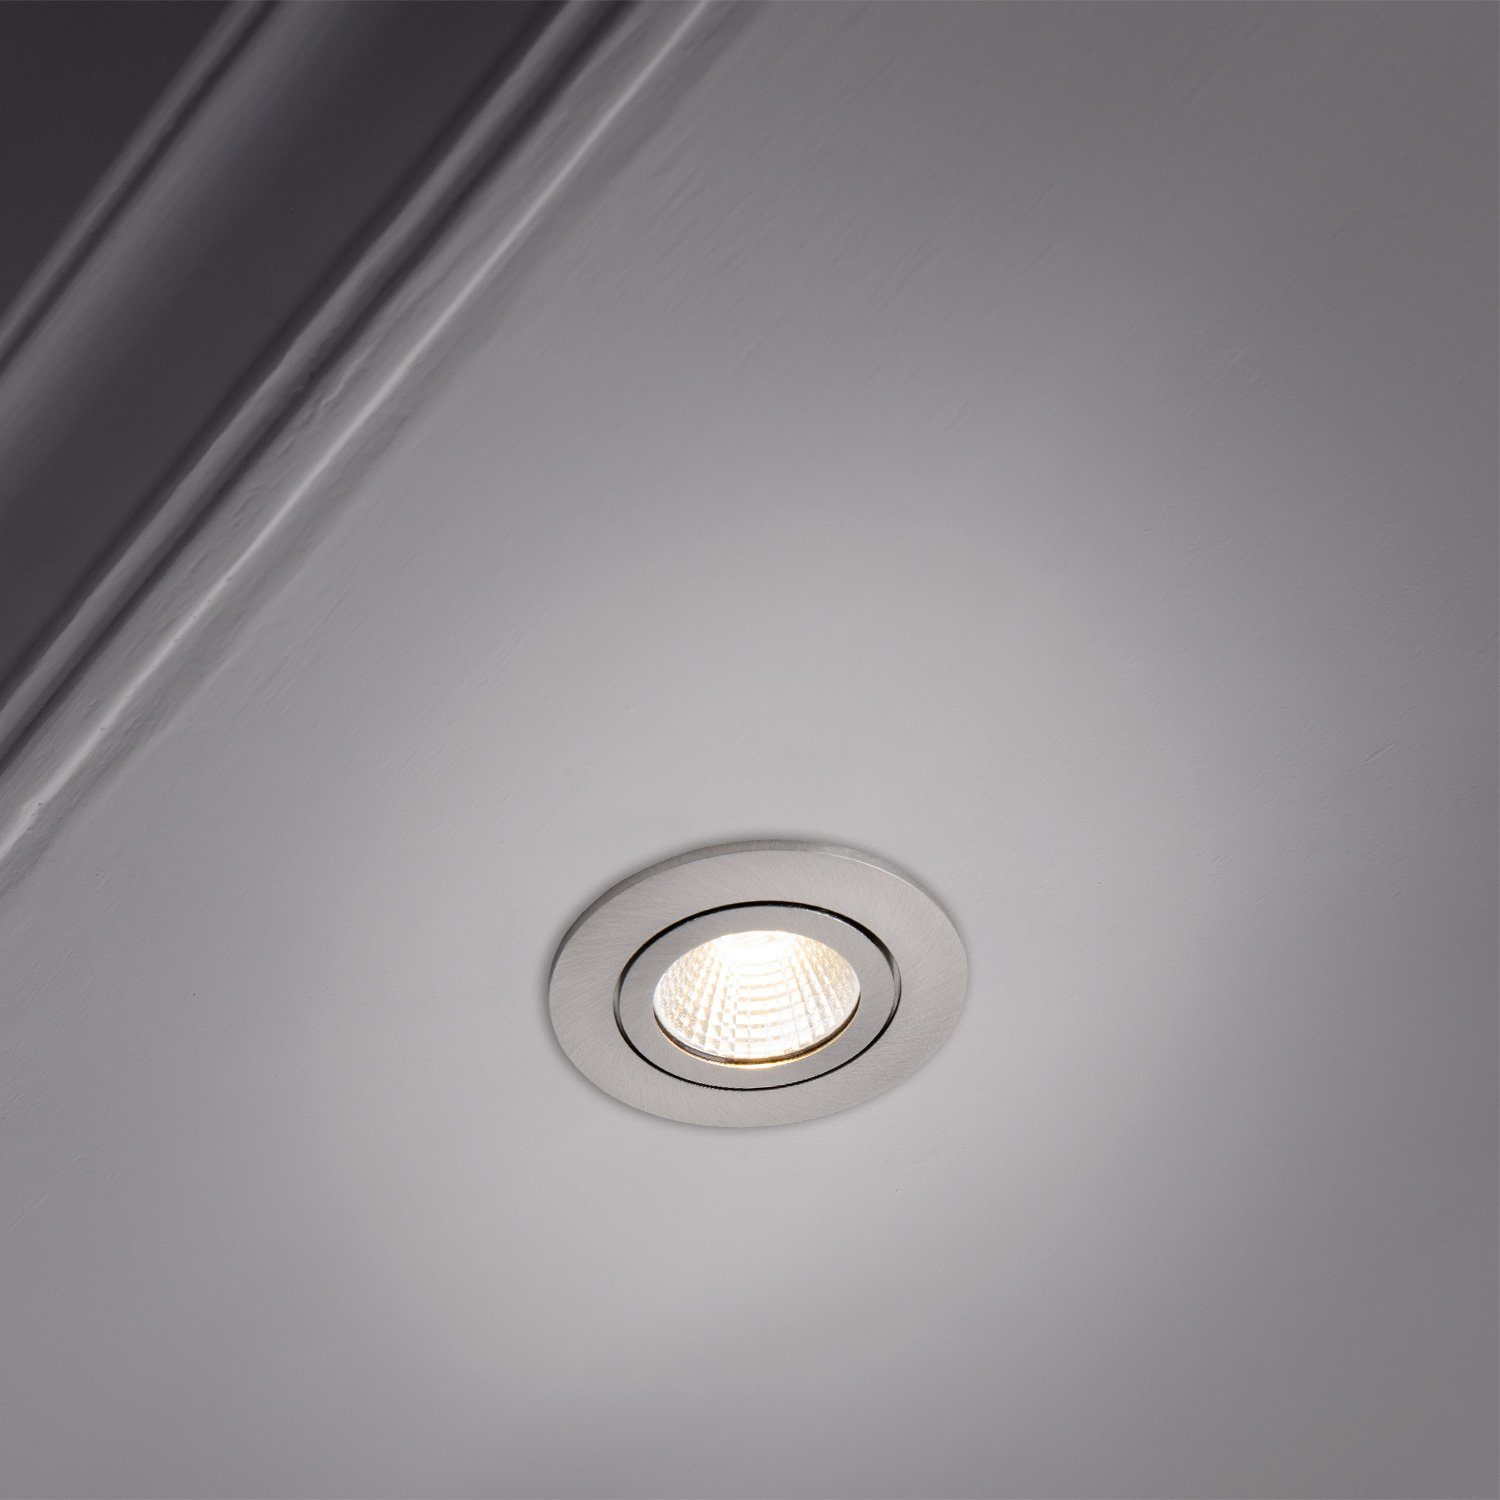 Paco Home Einbauleuchte Warmweiß, Flach Strahler LED Schwenkbar LED LED wechselbar, dimmbar Einbaustrahler Spotlight Rita